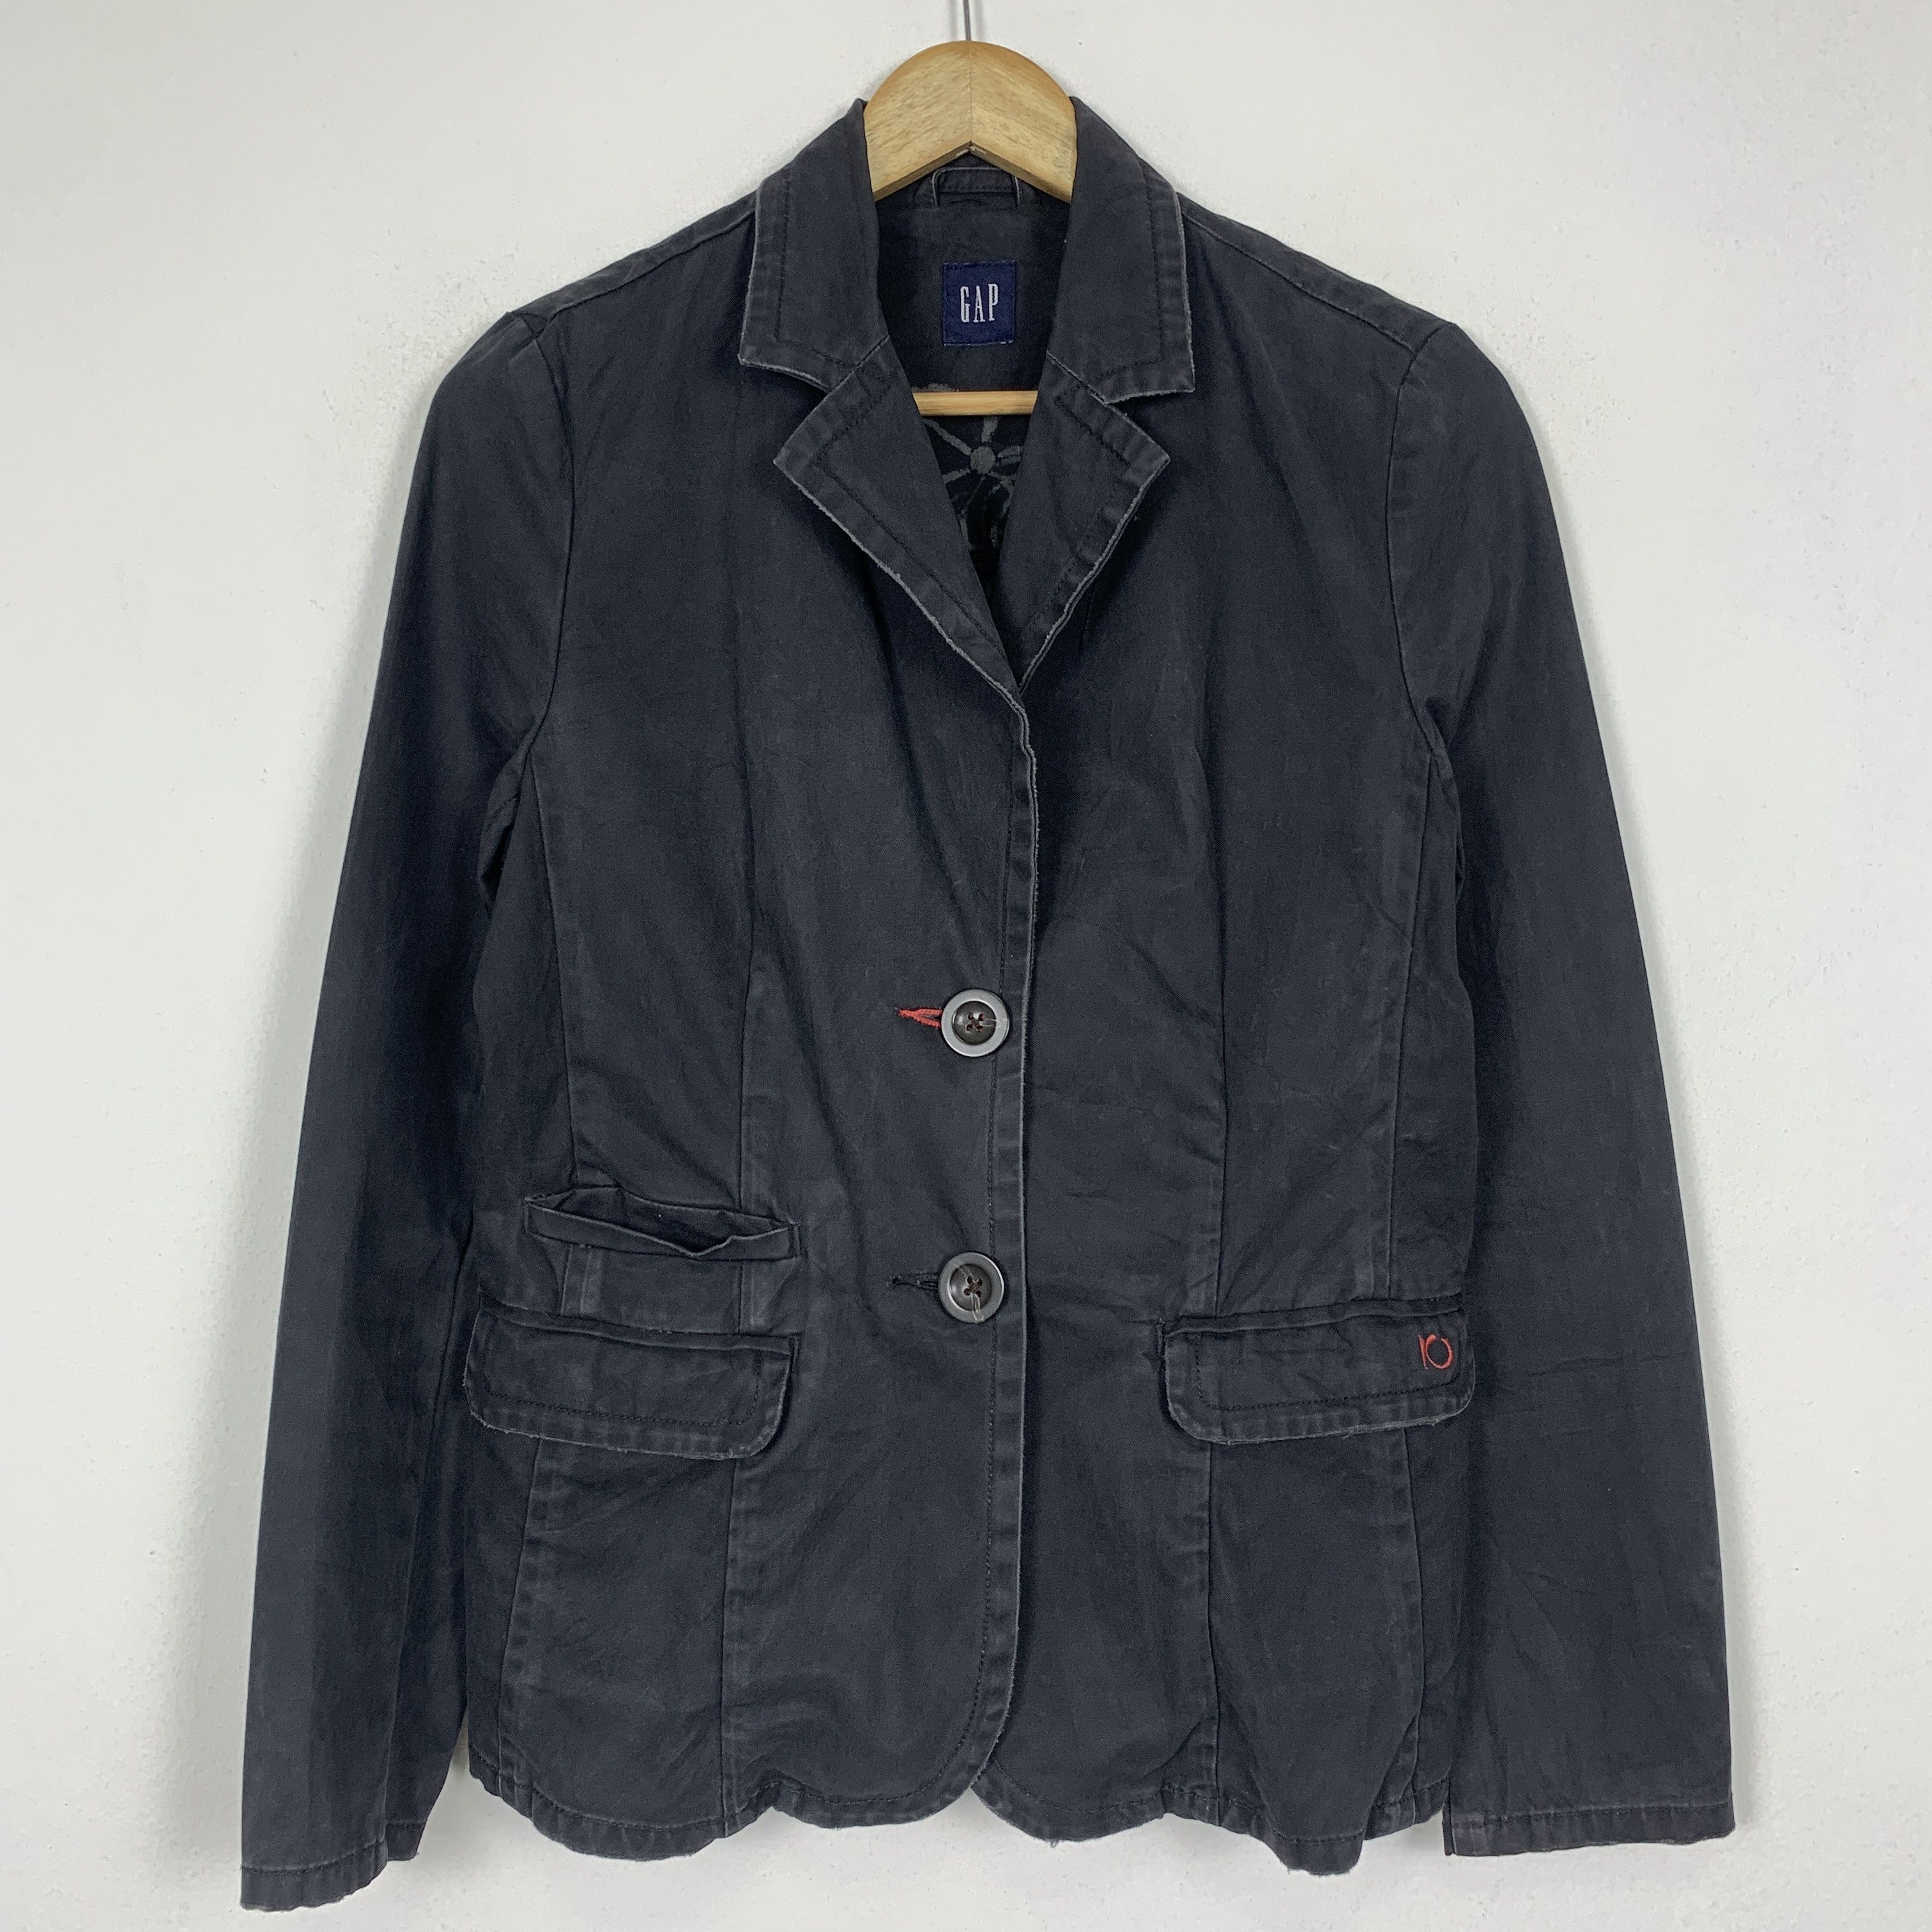 Vintage Vintage Gap Rugged Faded Button Jacket | Grailed